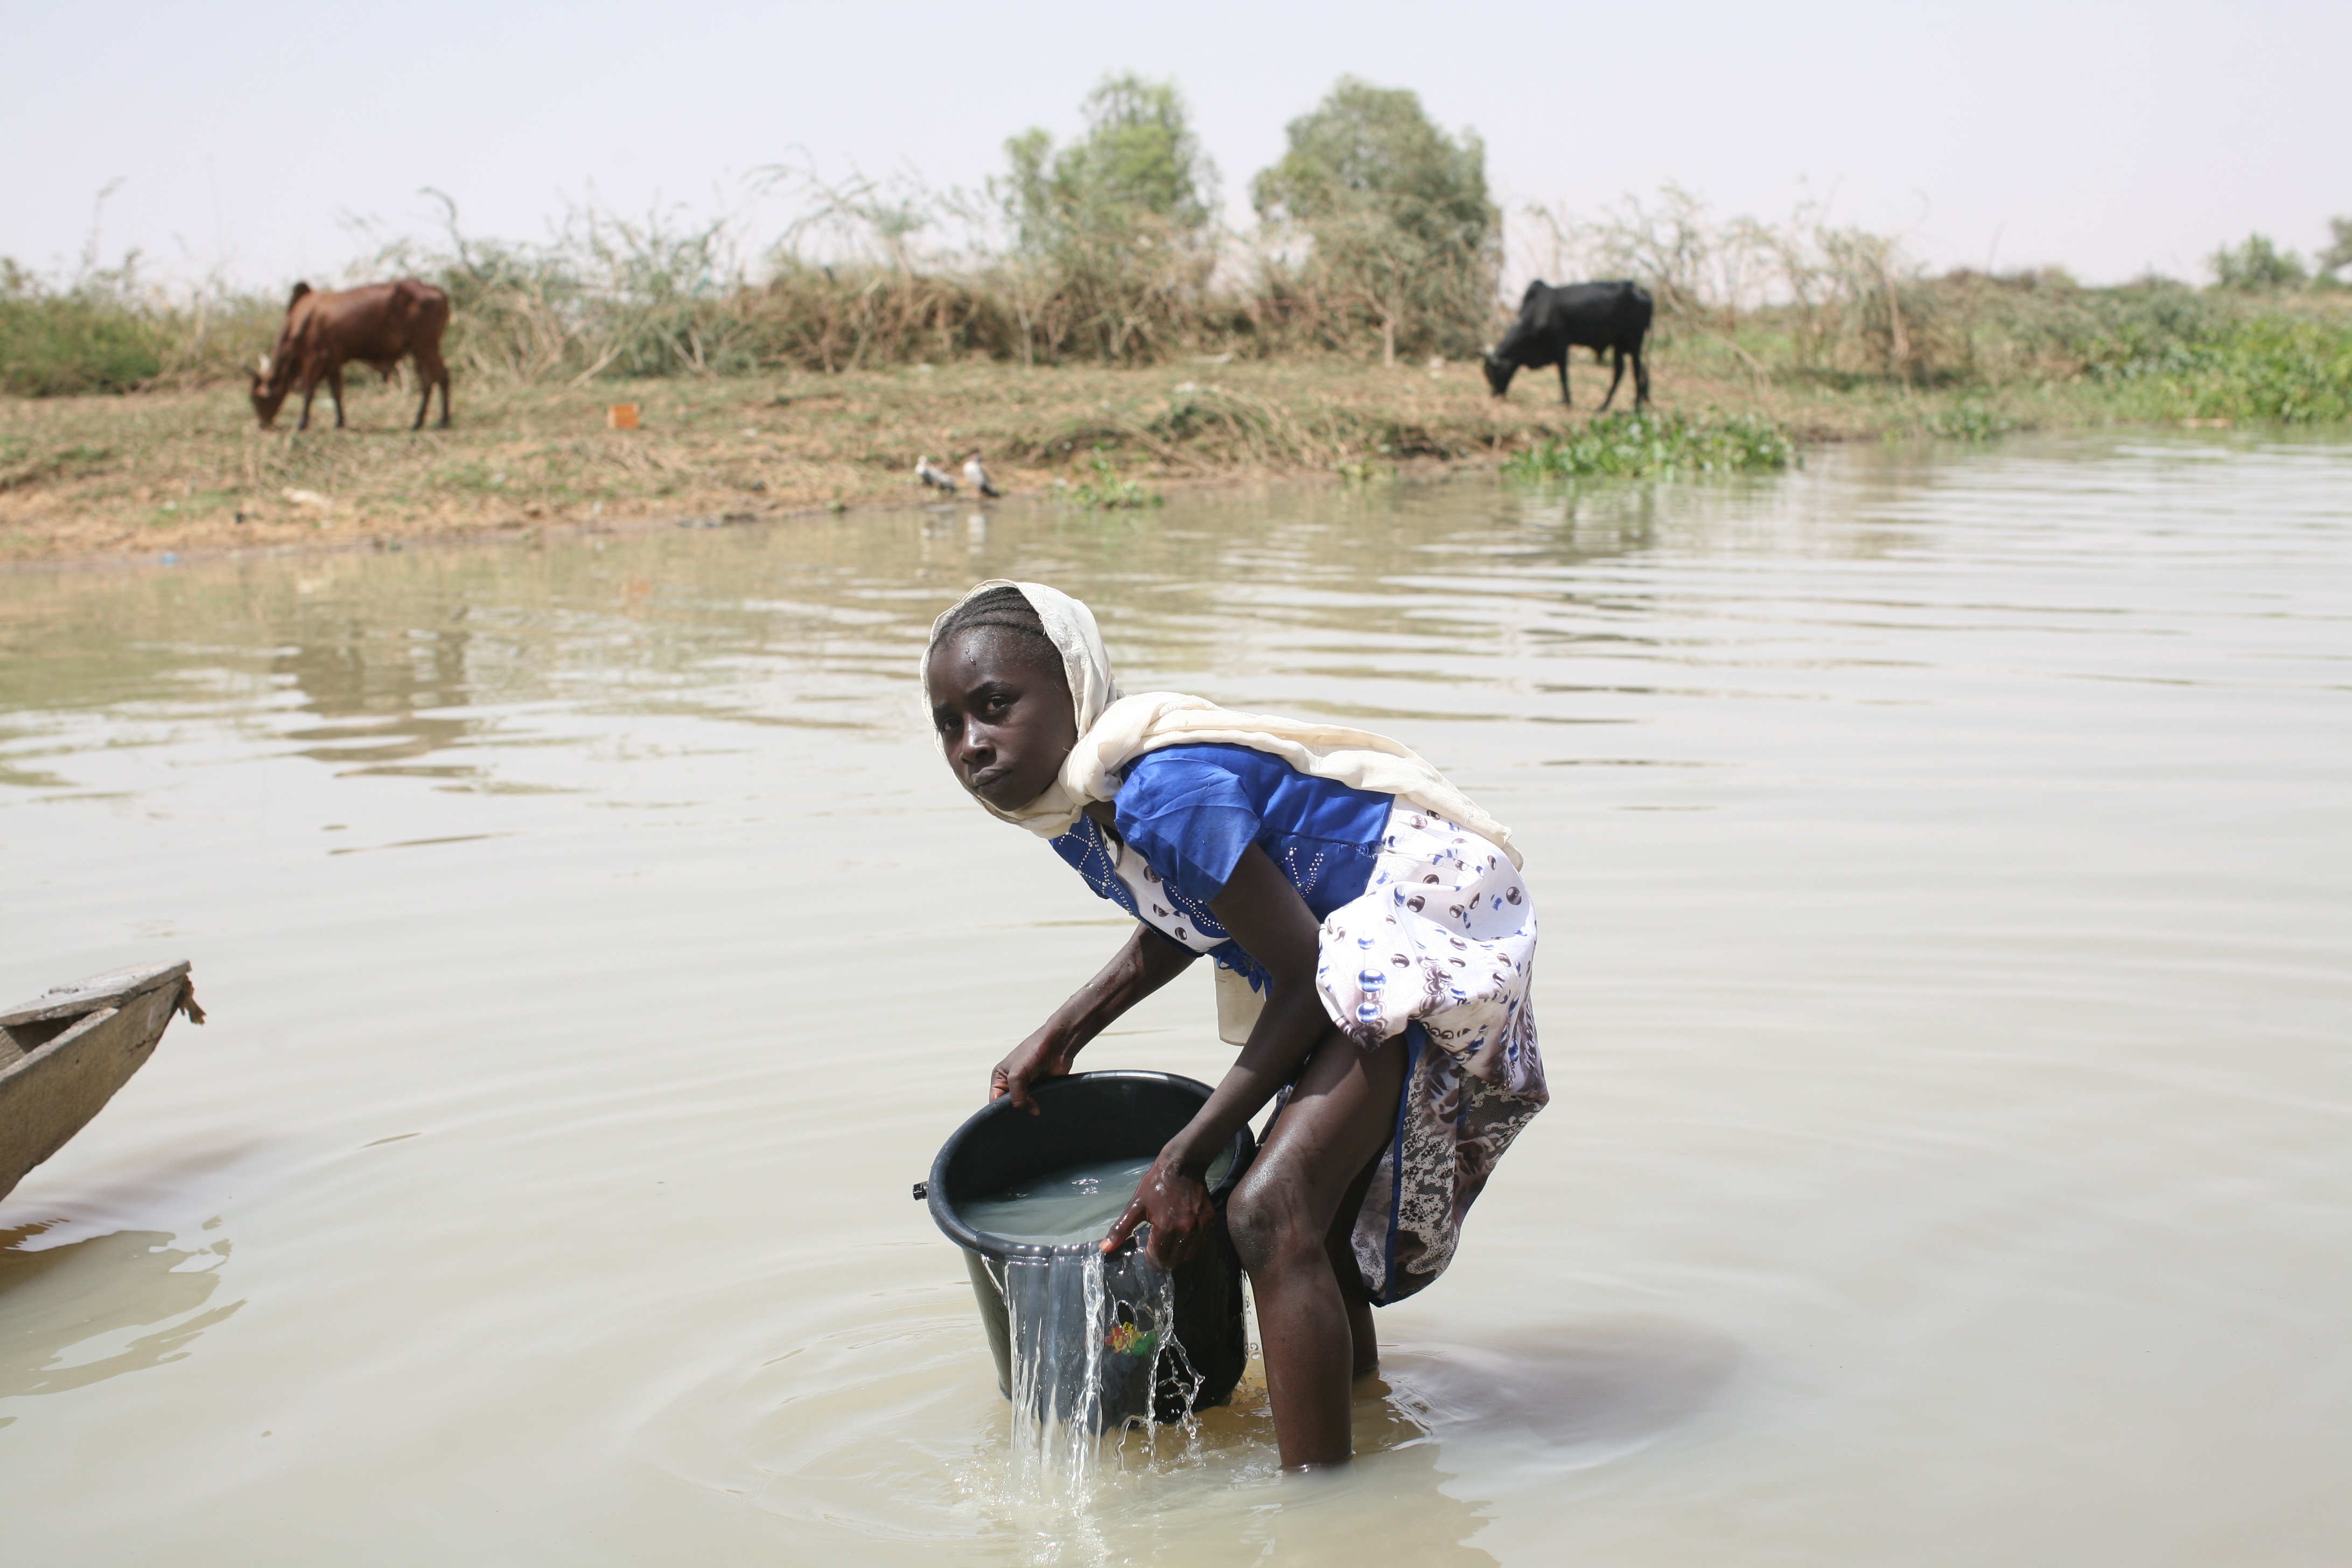 Nana fetching water from Fleuve Niger